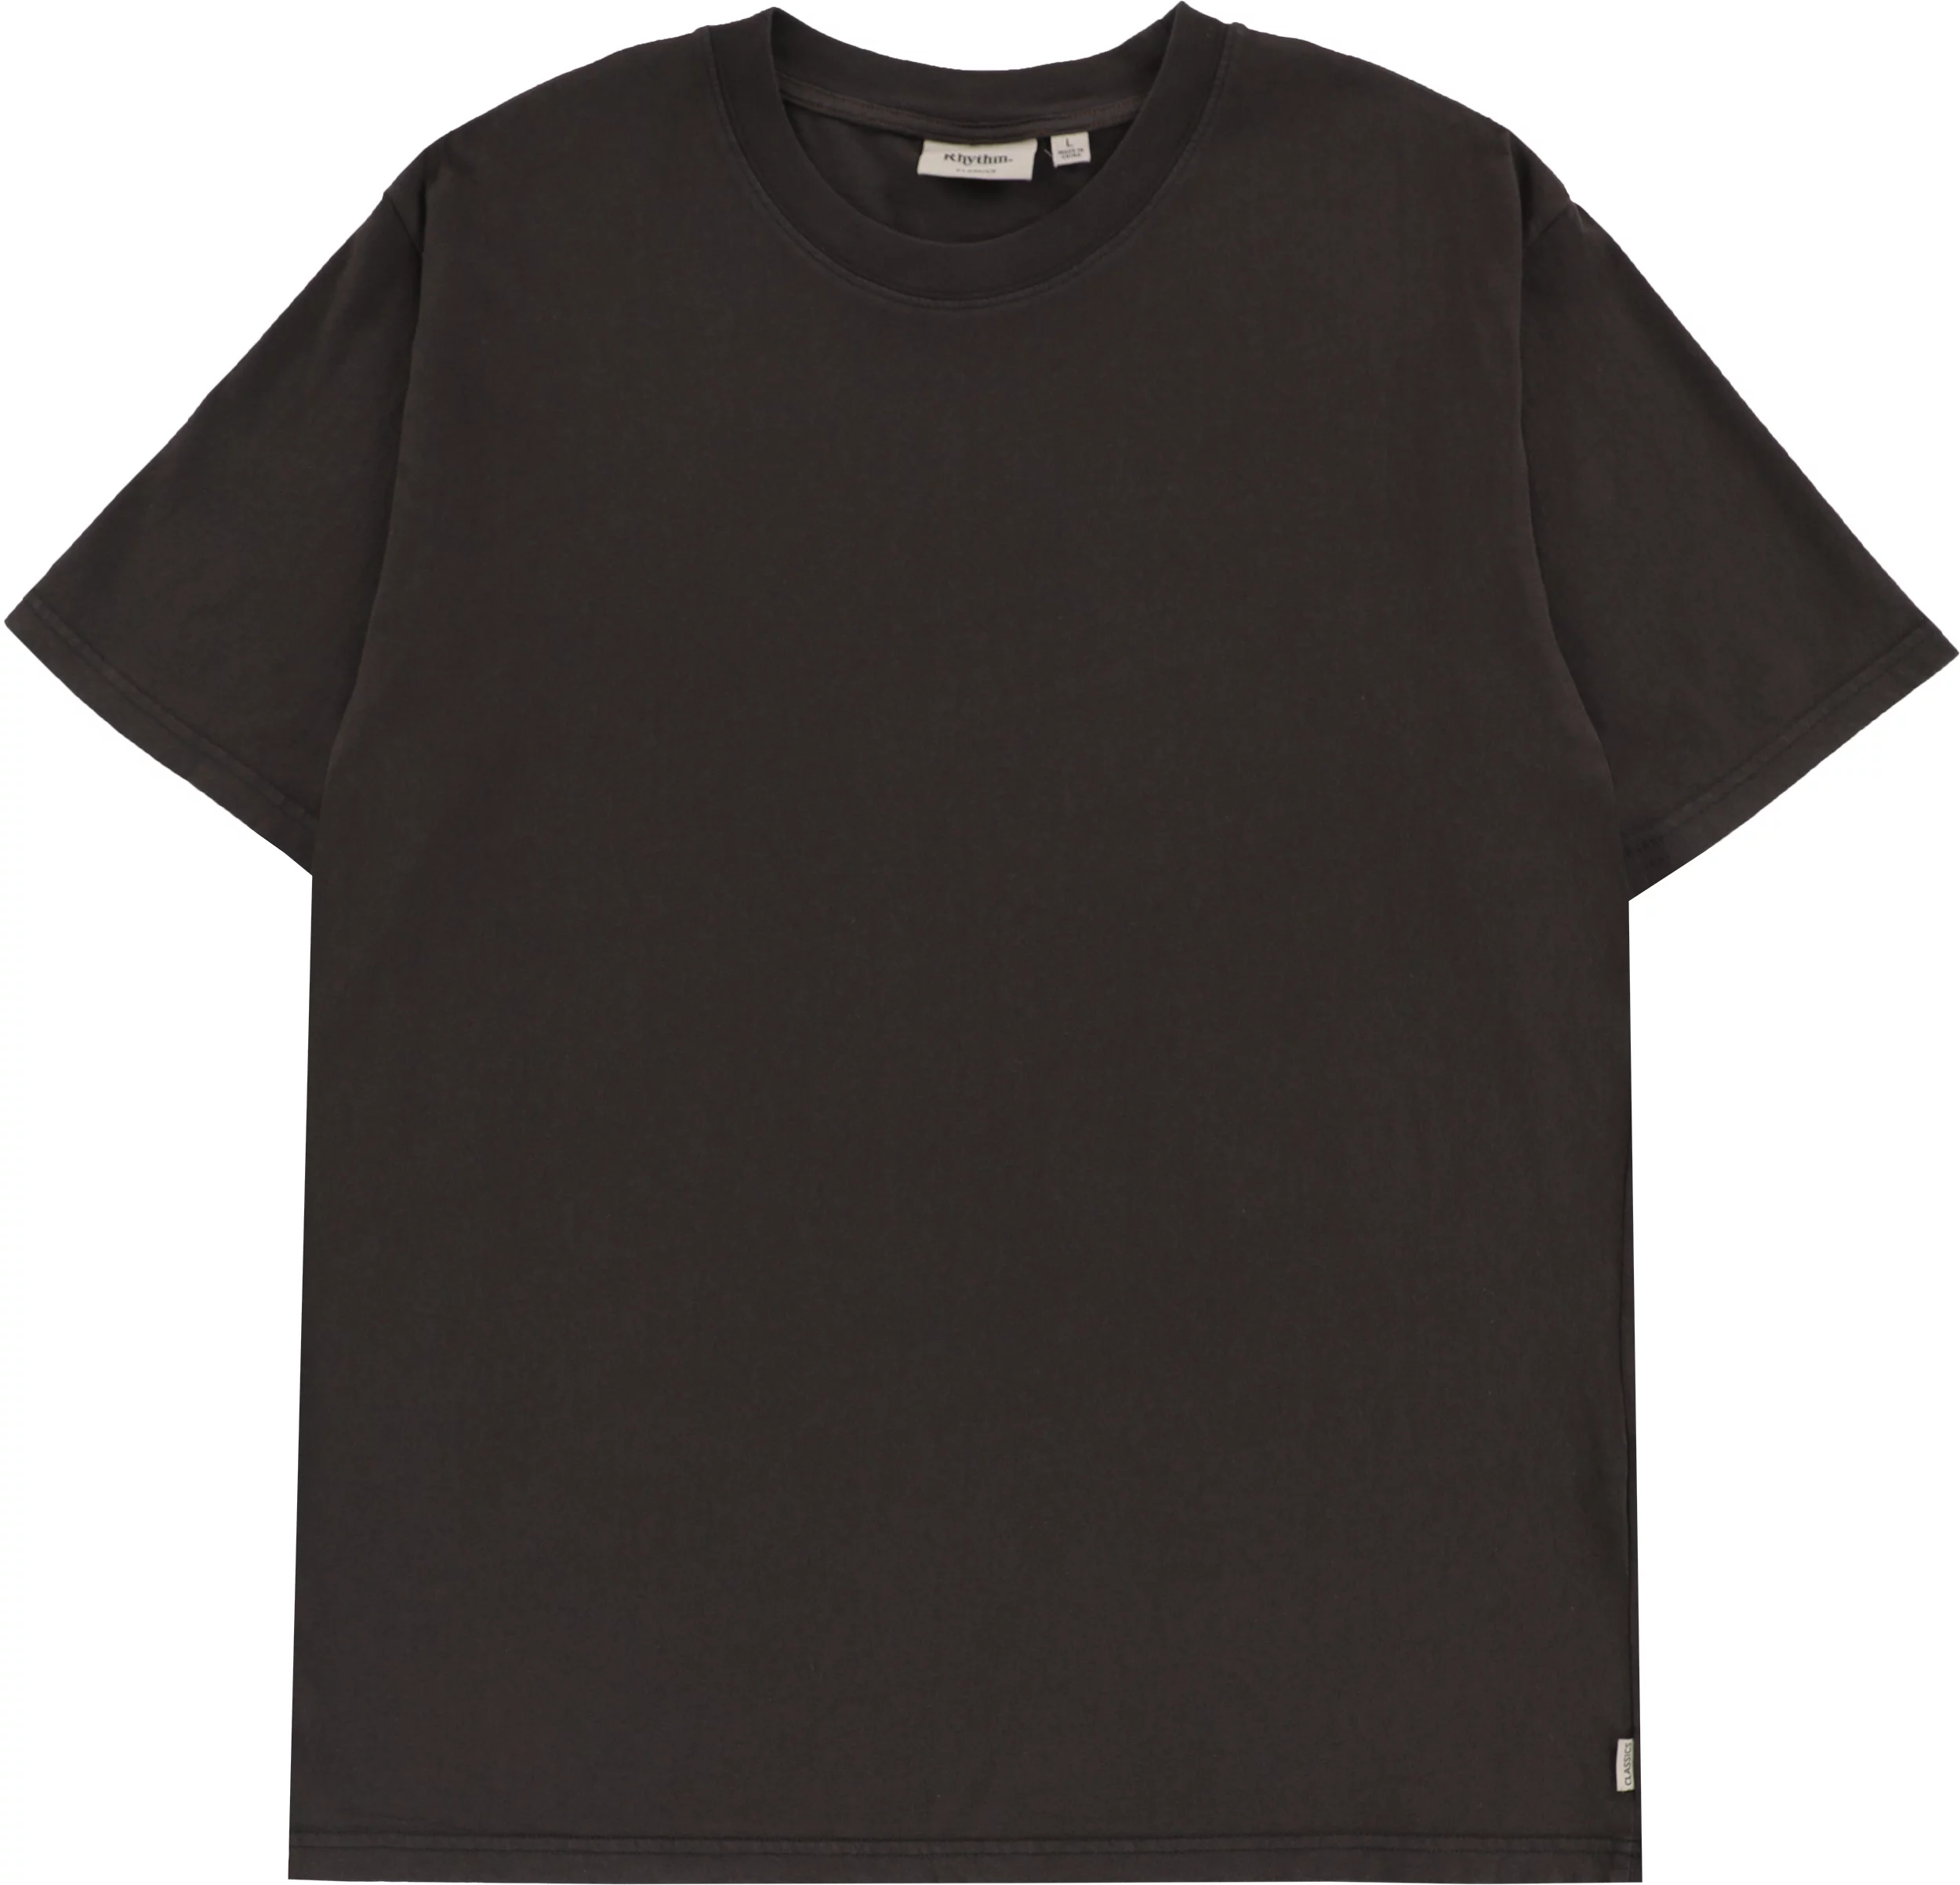 Rhythm Classic Vintage T-Shirt - Black - L